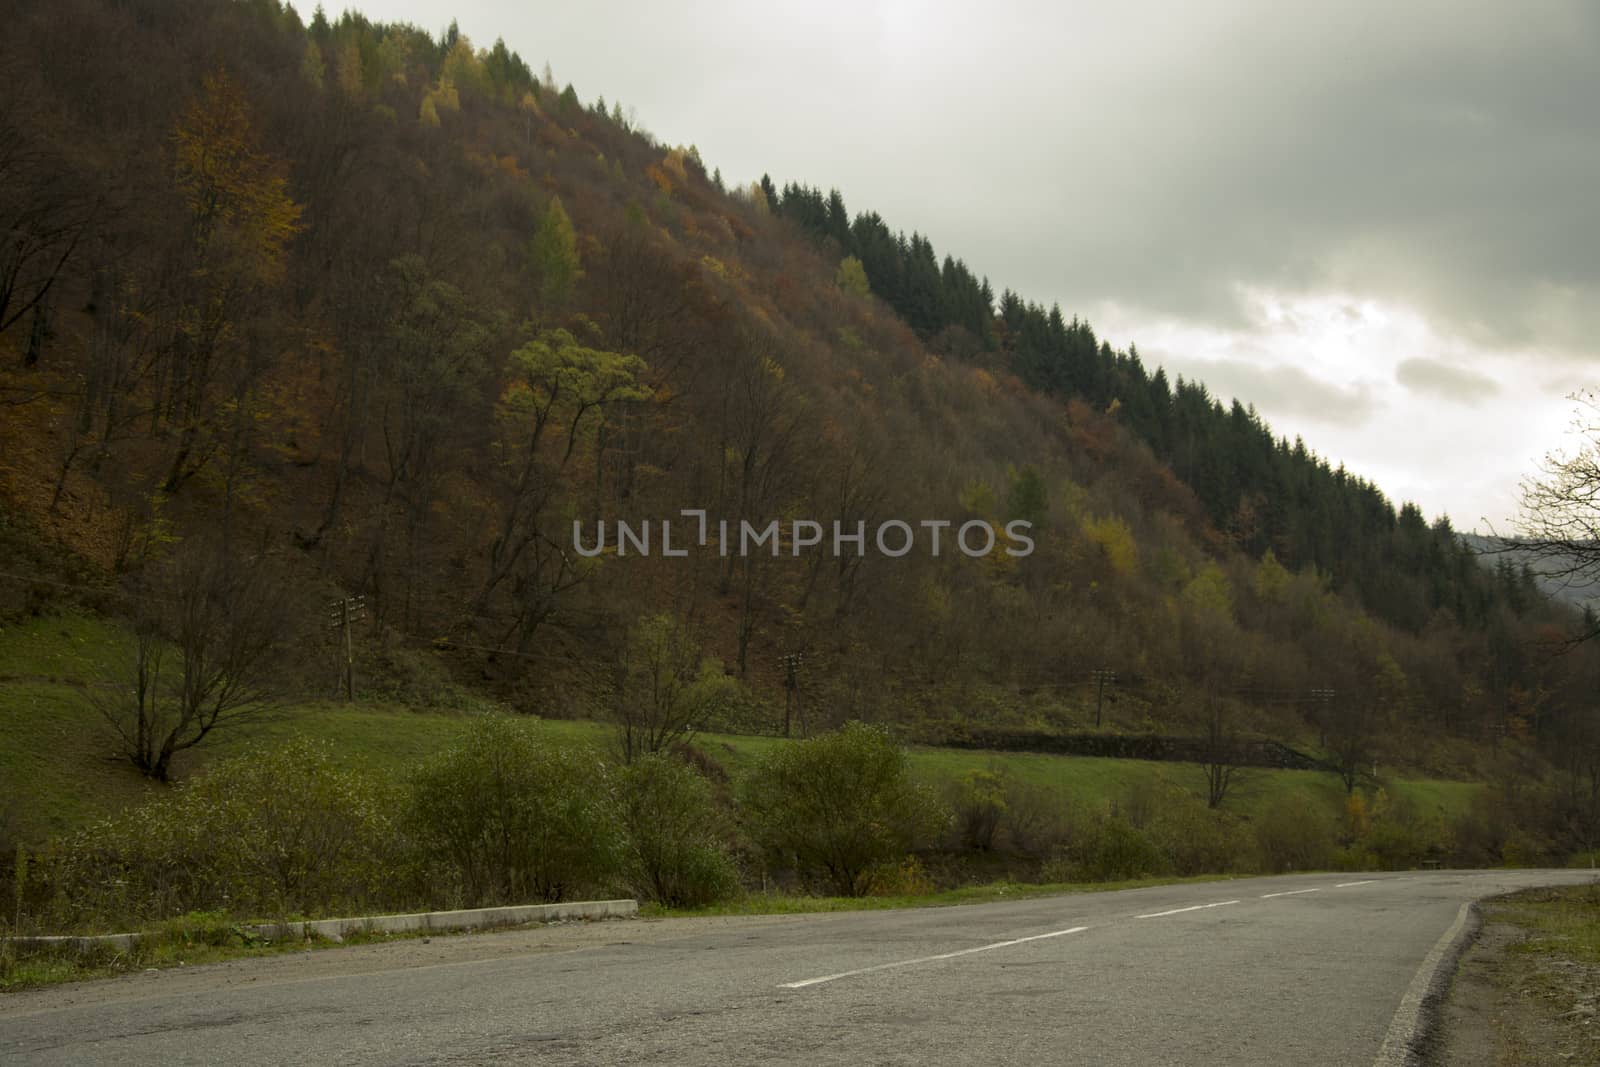 Asphalt road in mountains in autumn